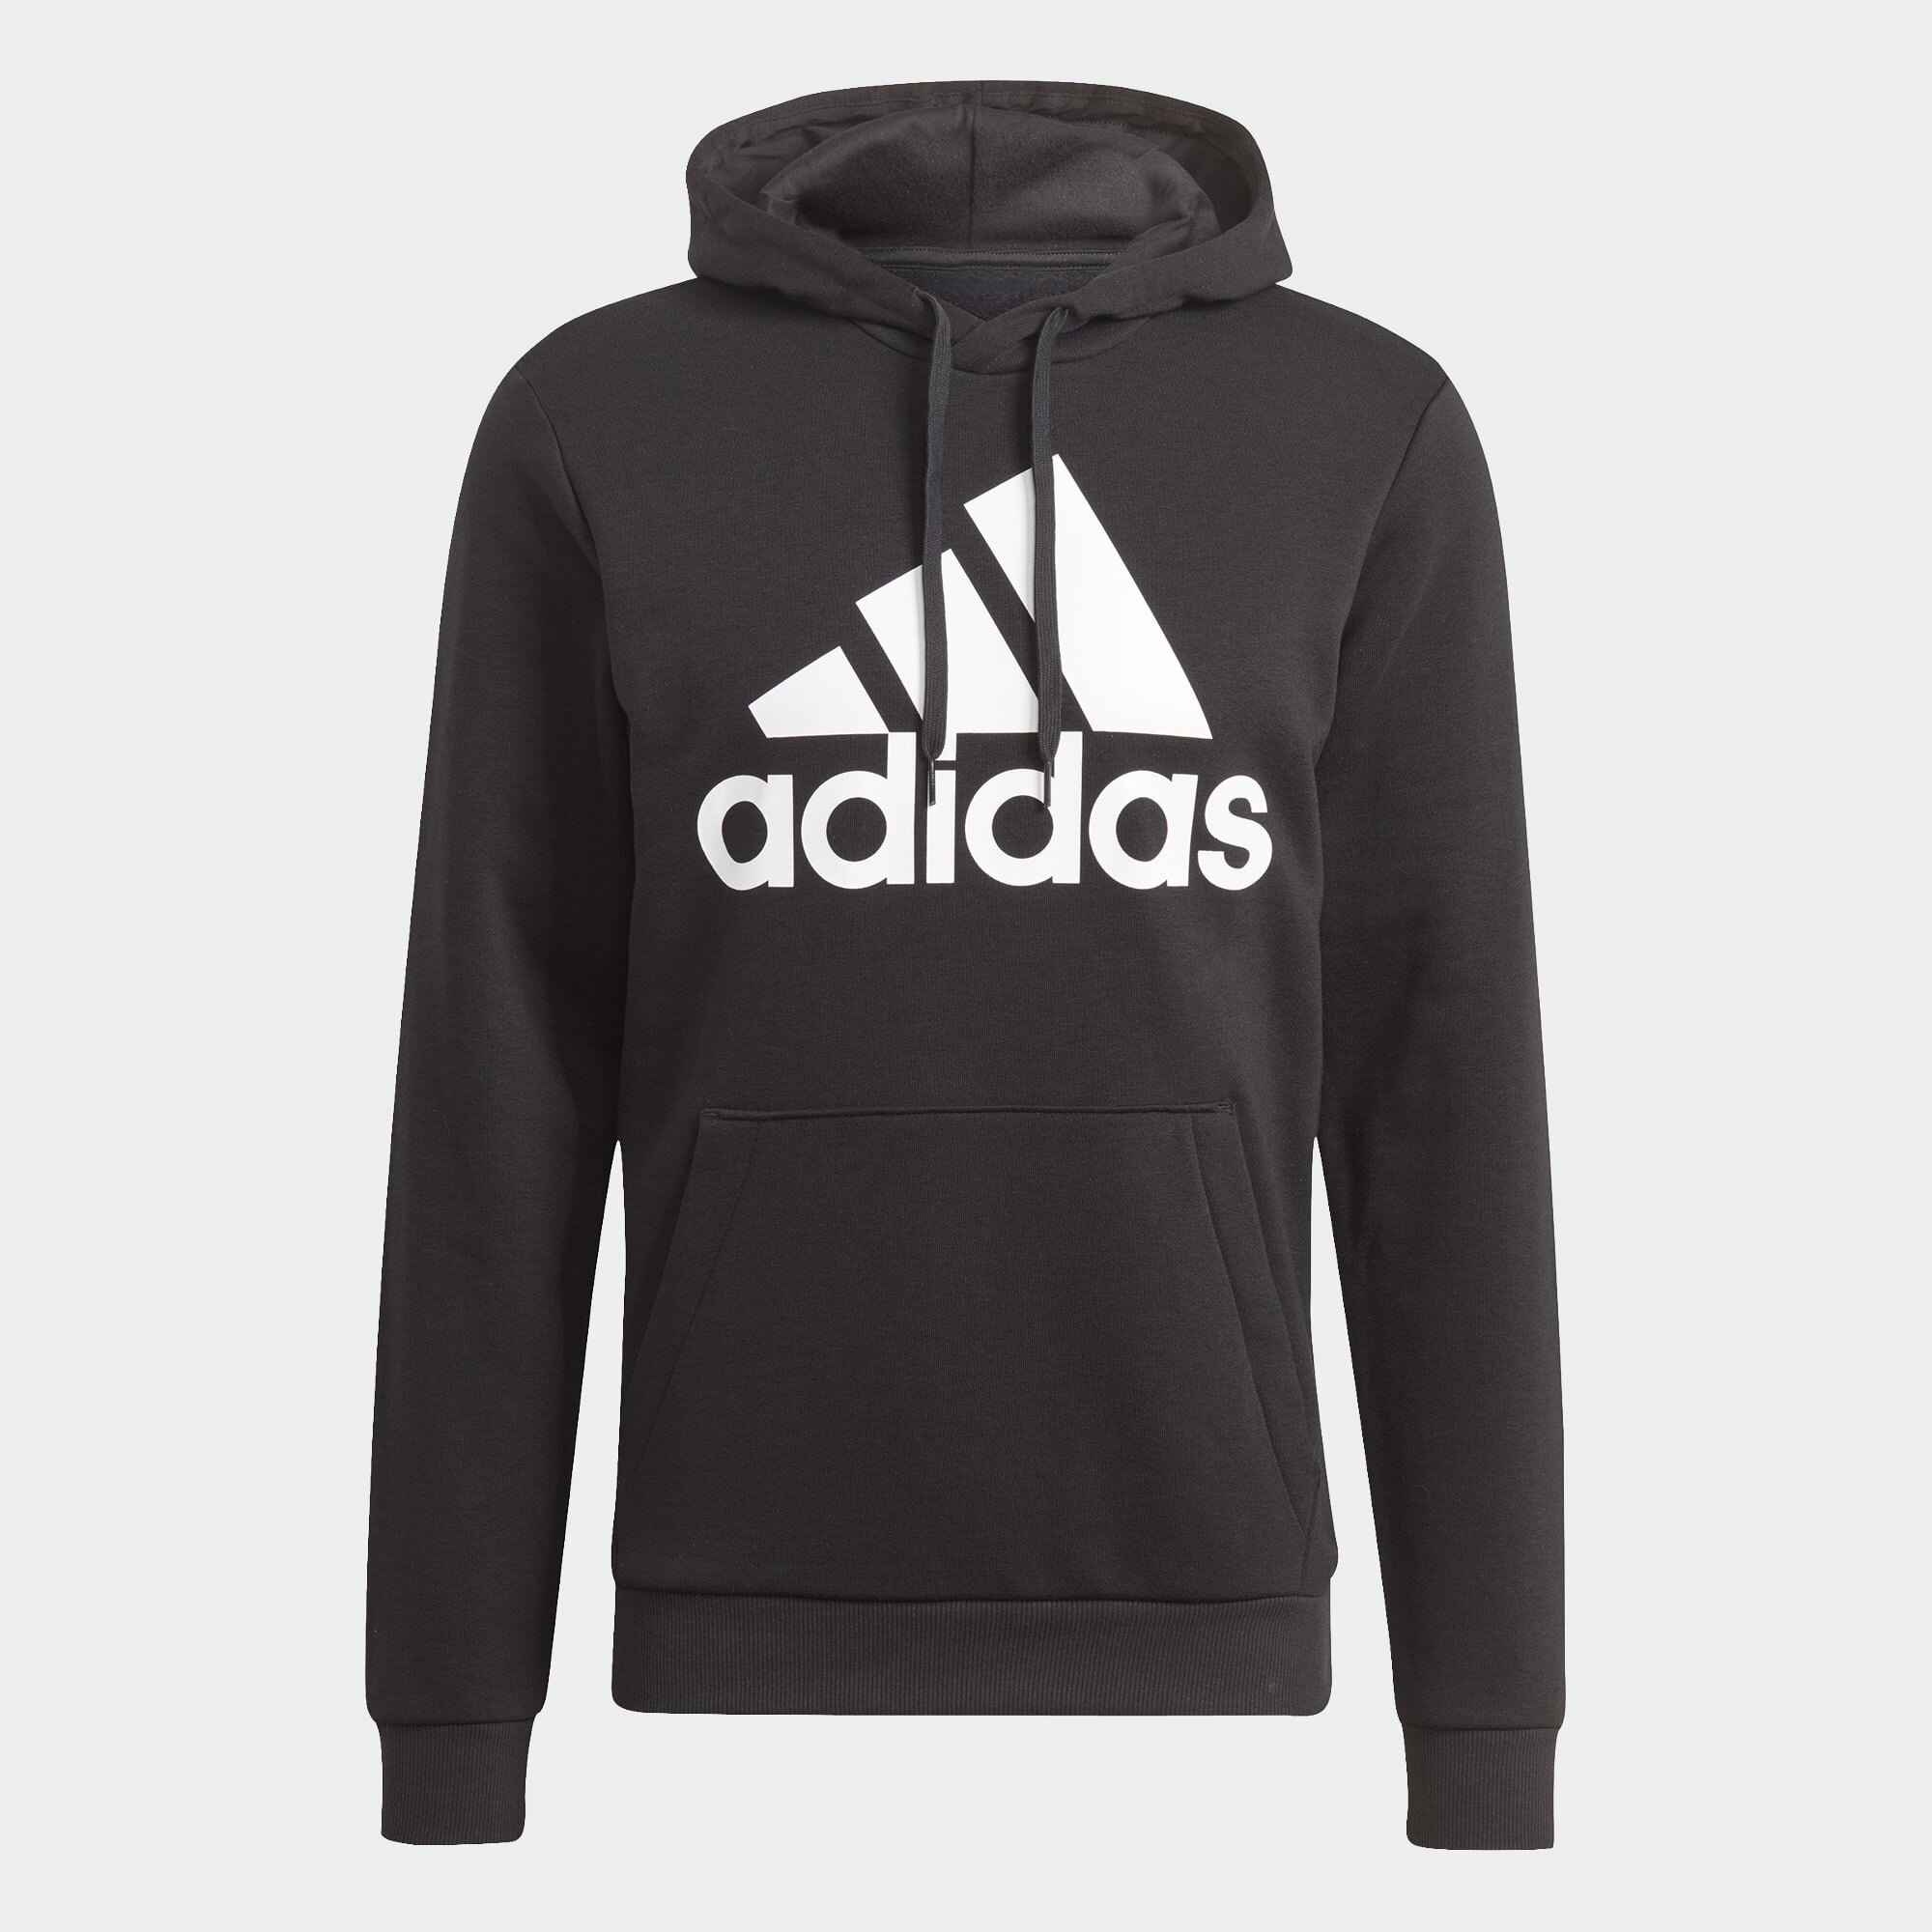 adidas hoodie afterpay